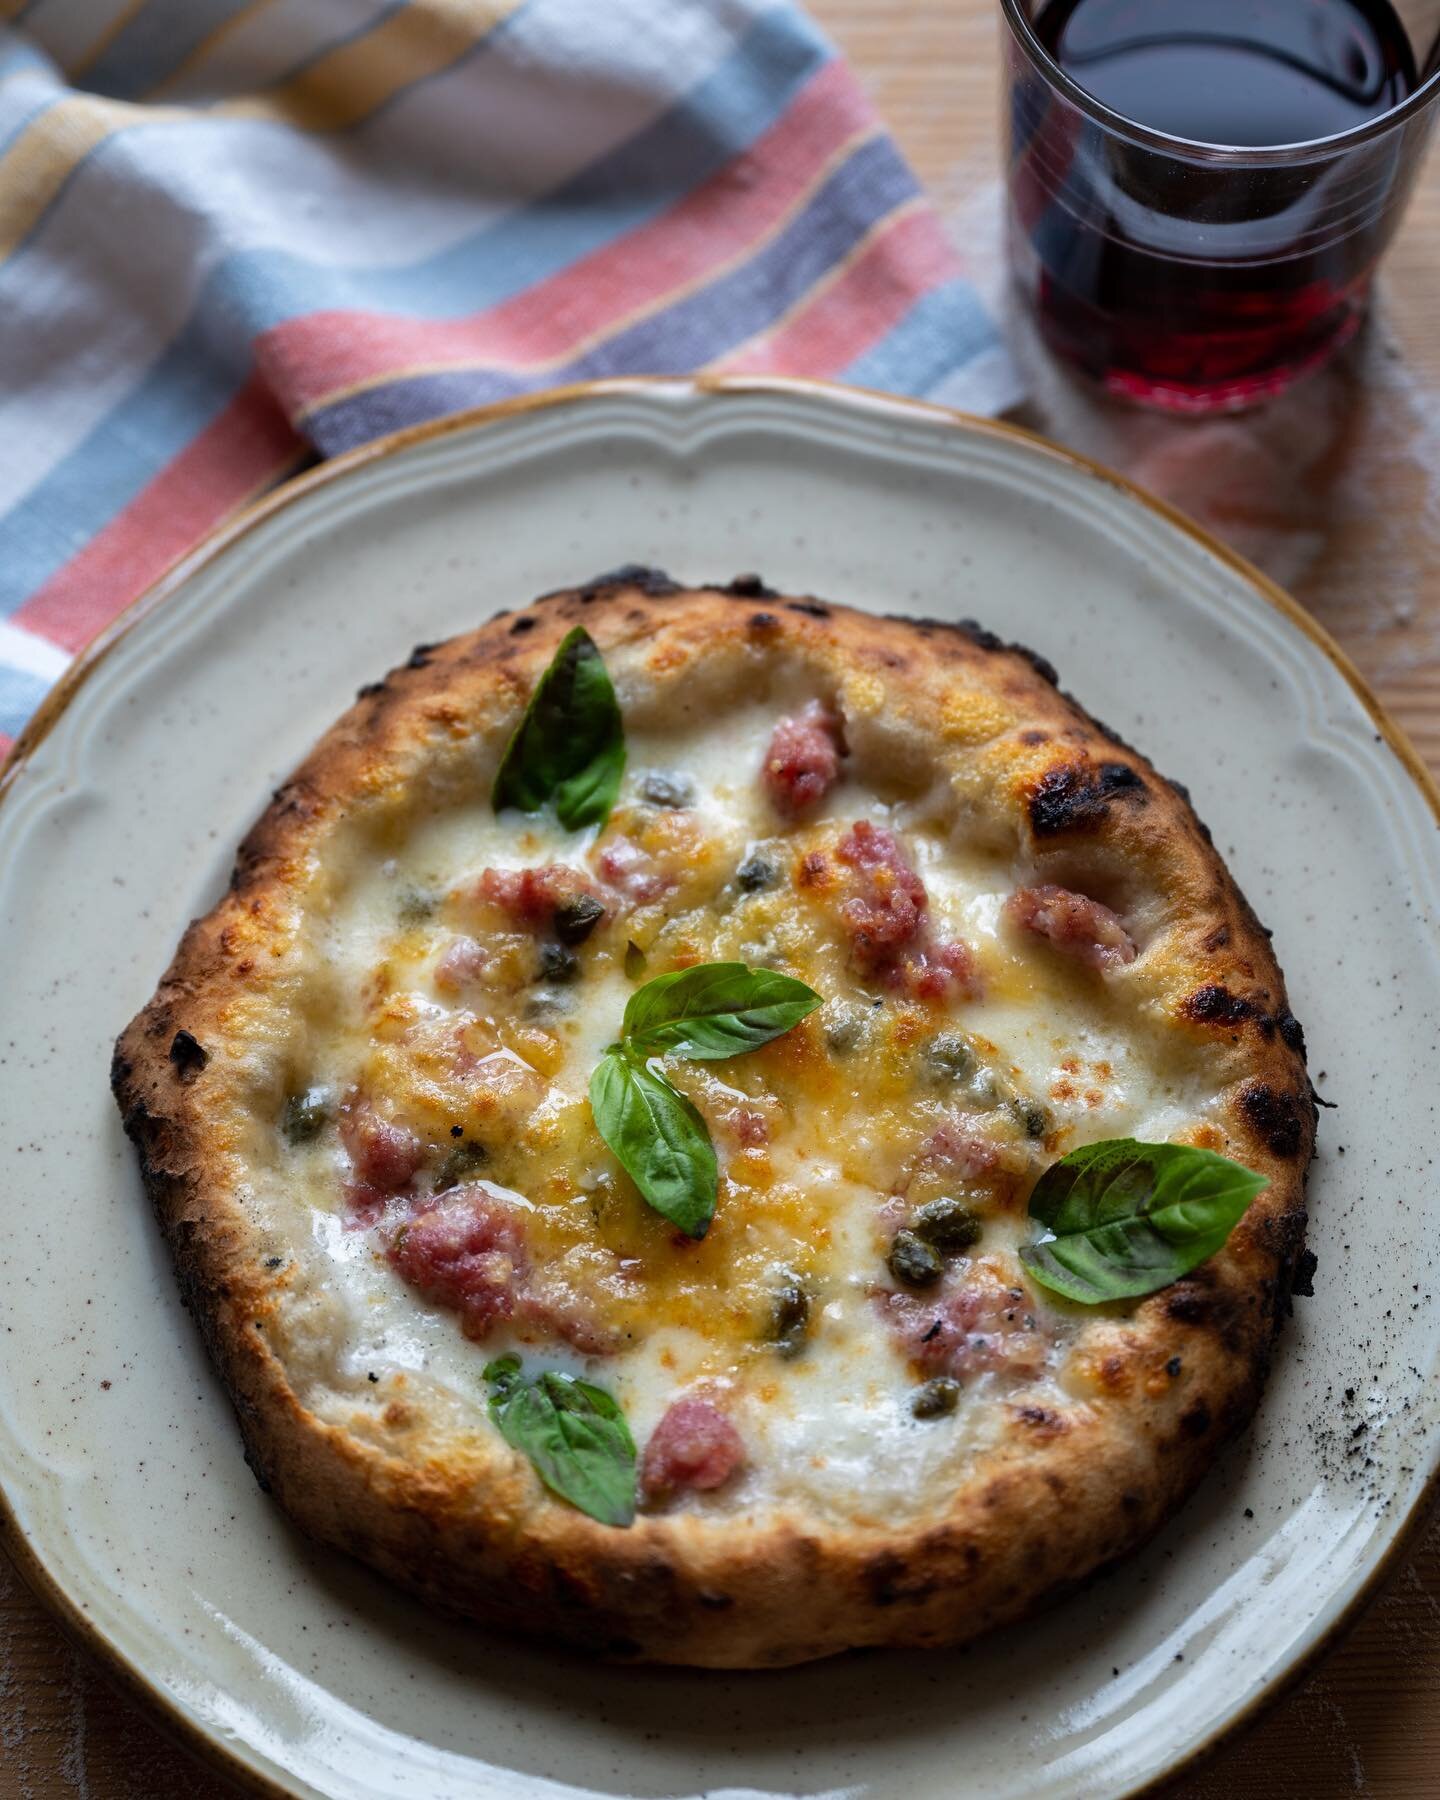 Den b&auml;sta pizzan &auml;r den bakad i vedeldad ugn! Pizza bianca med mozzarella, v&auml;sterbottenost, salsiccia och kapris. S&aring; j&auml;kla gott!
. . .
The best pizza is the one baked in a wood fired oven! Pizza bianca with mozzarella, v&aum